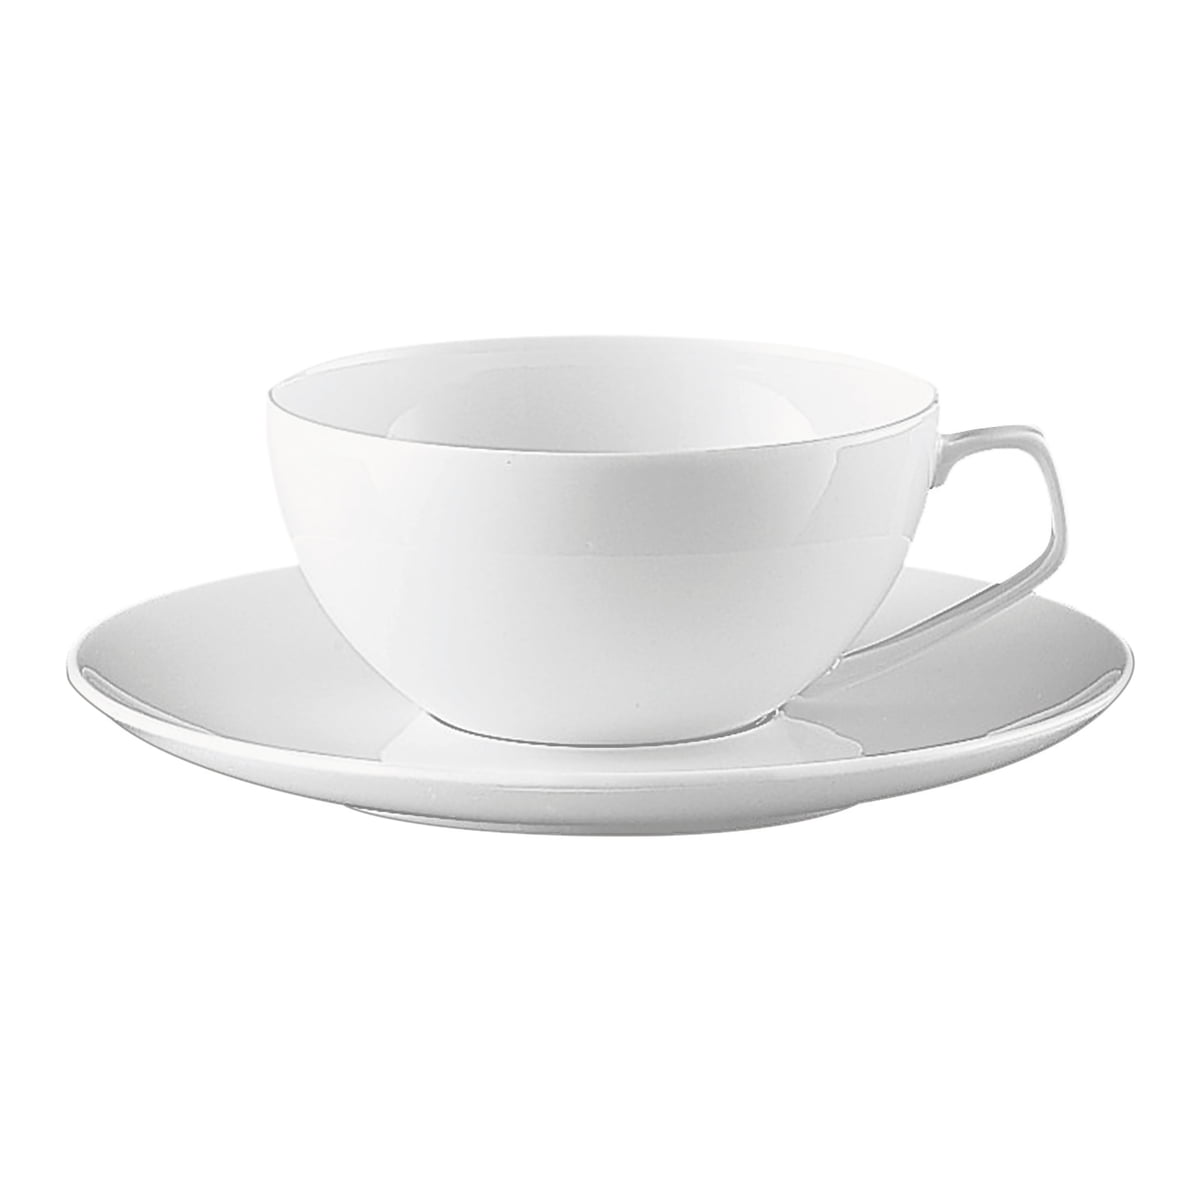 Rosenthal - Tac teacup | Connox